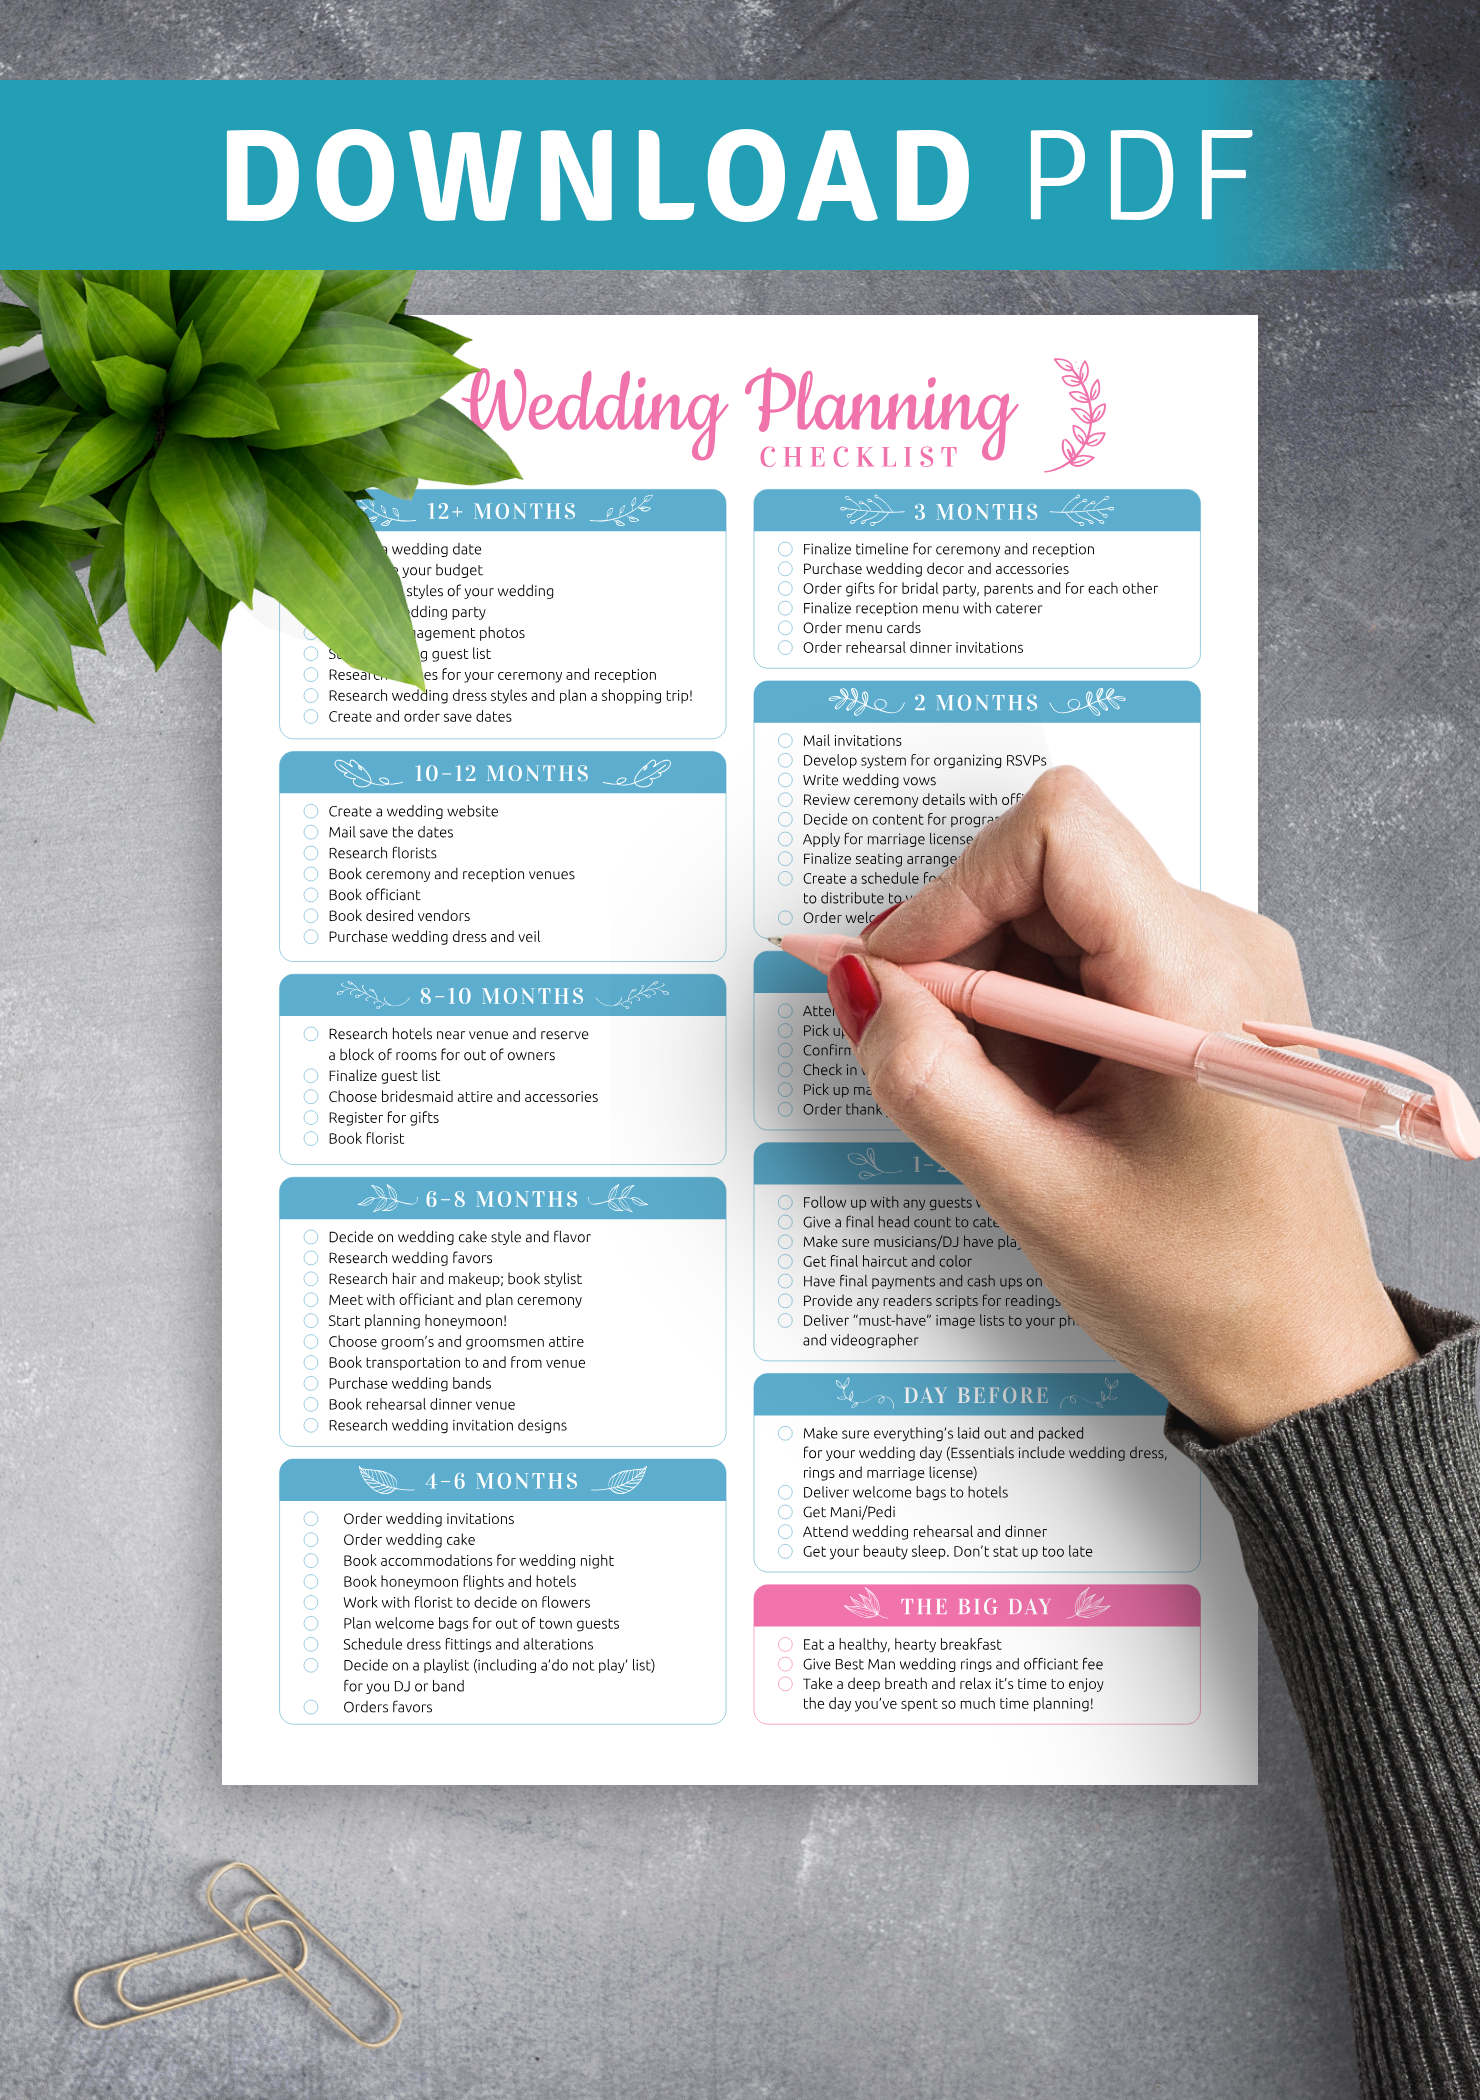 Keroney blogg se Wedding Planning Checklist